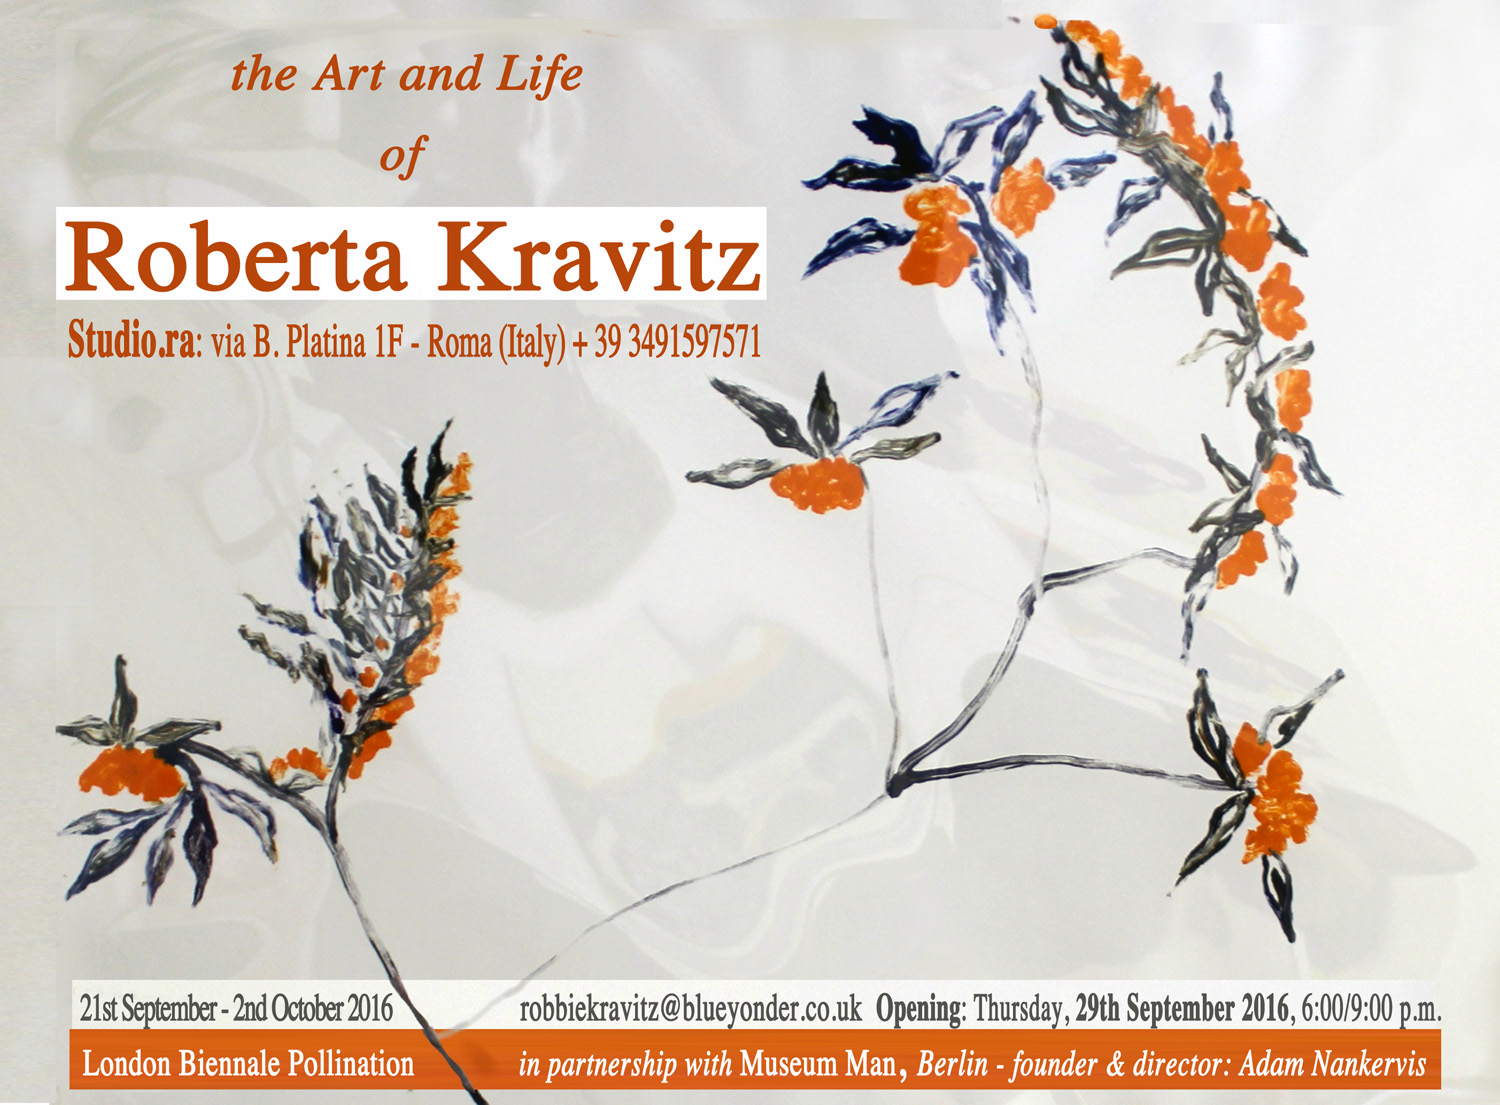 Roberta Kravitz invite